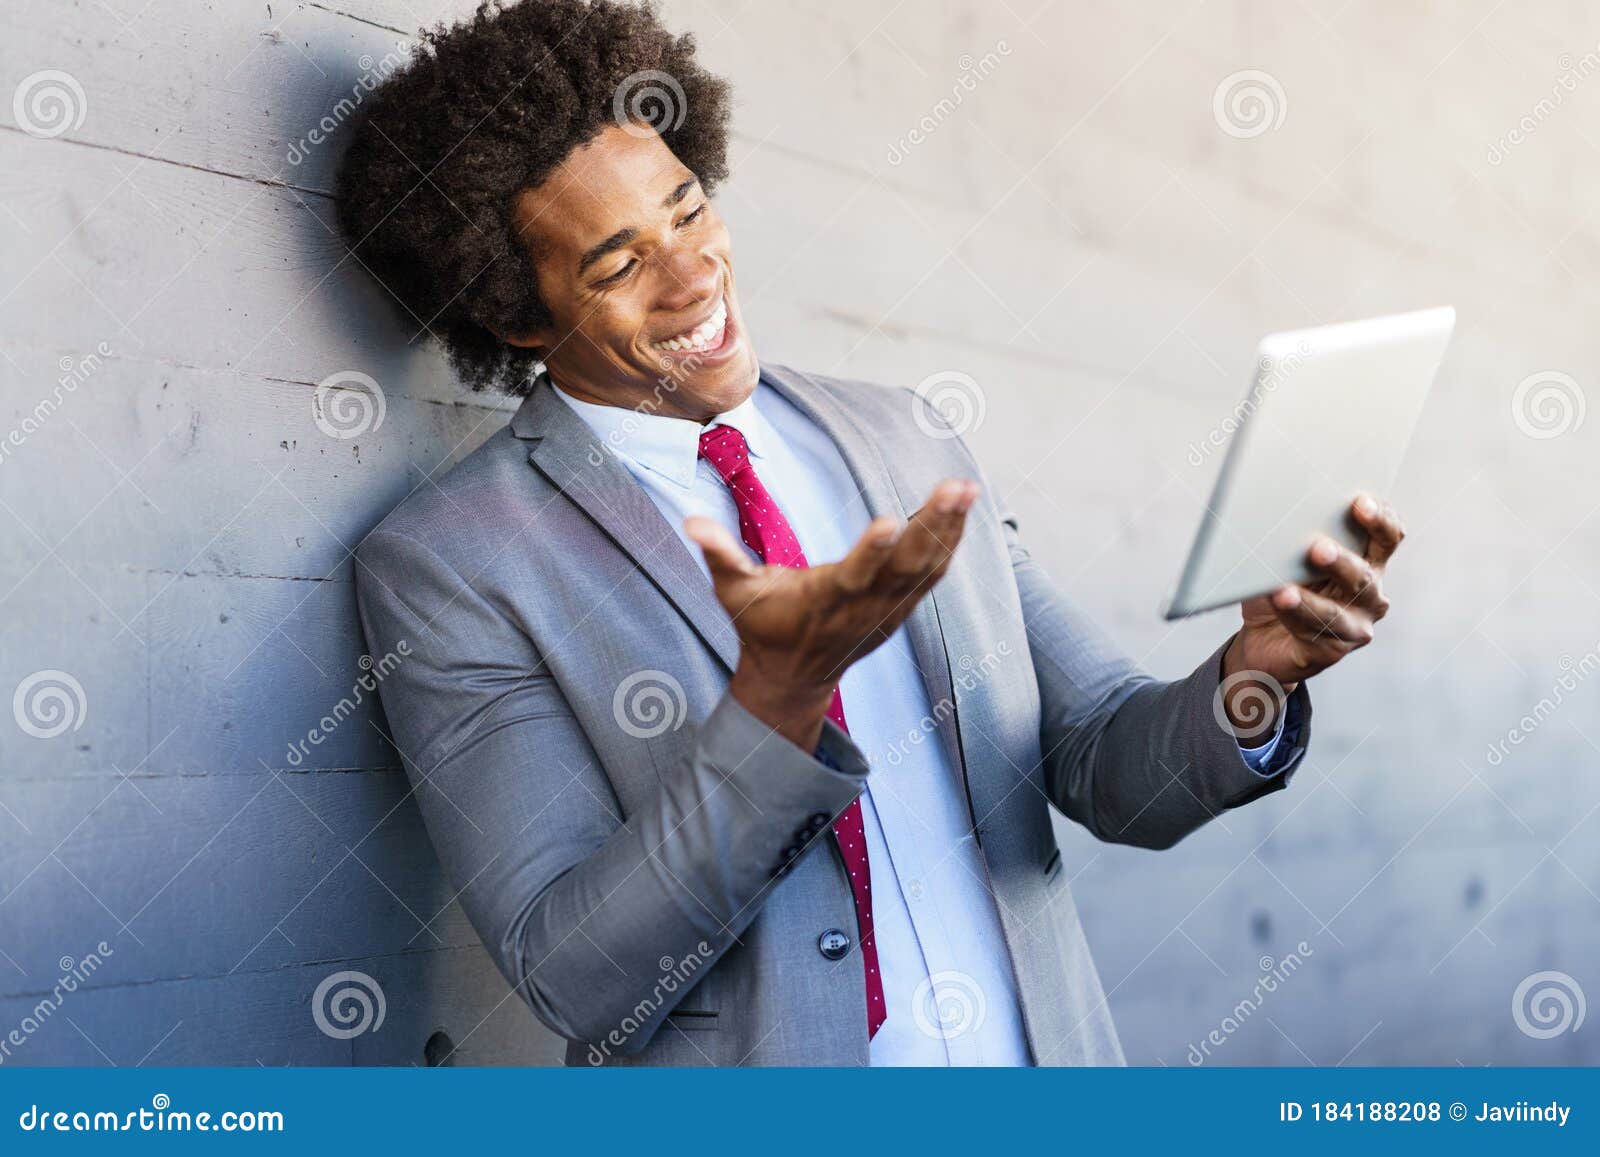 black businessman using a digital tablet in urban background